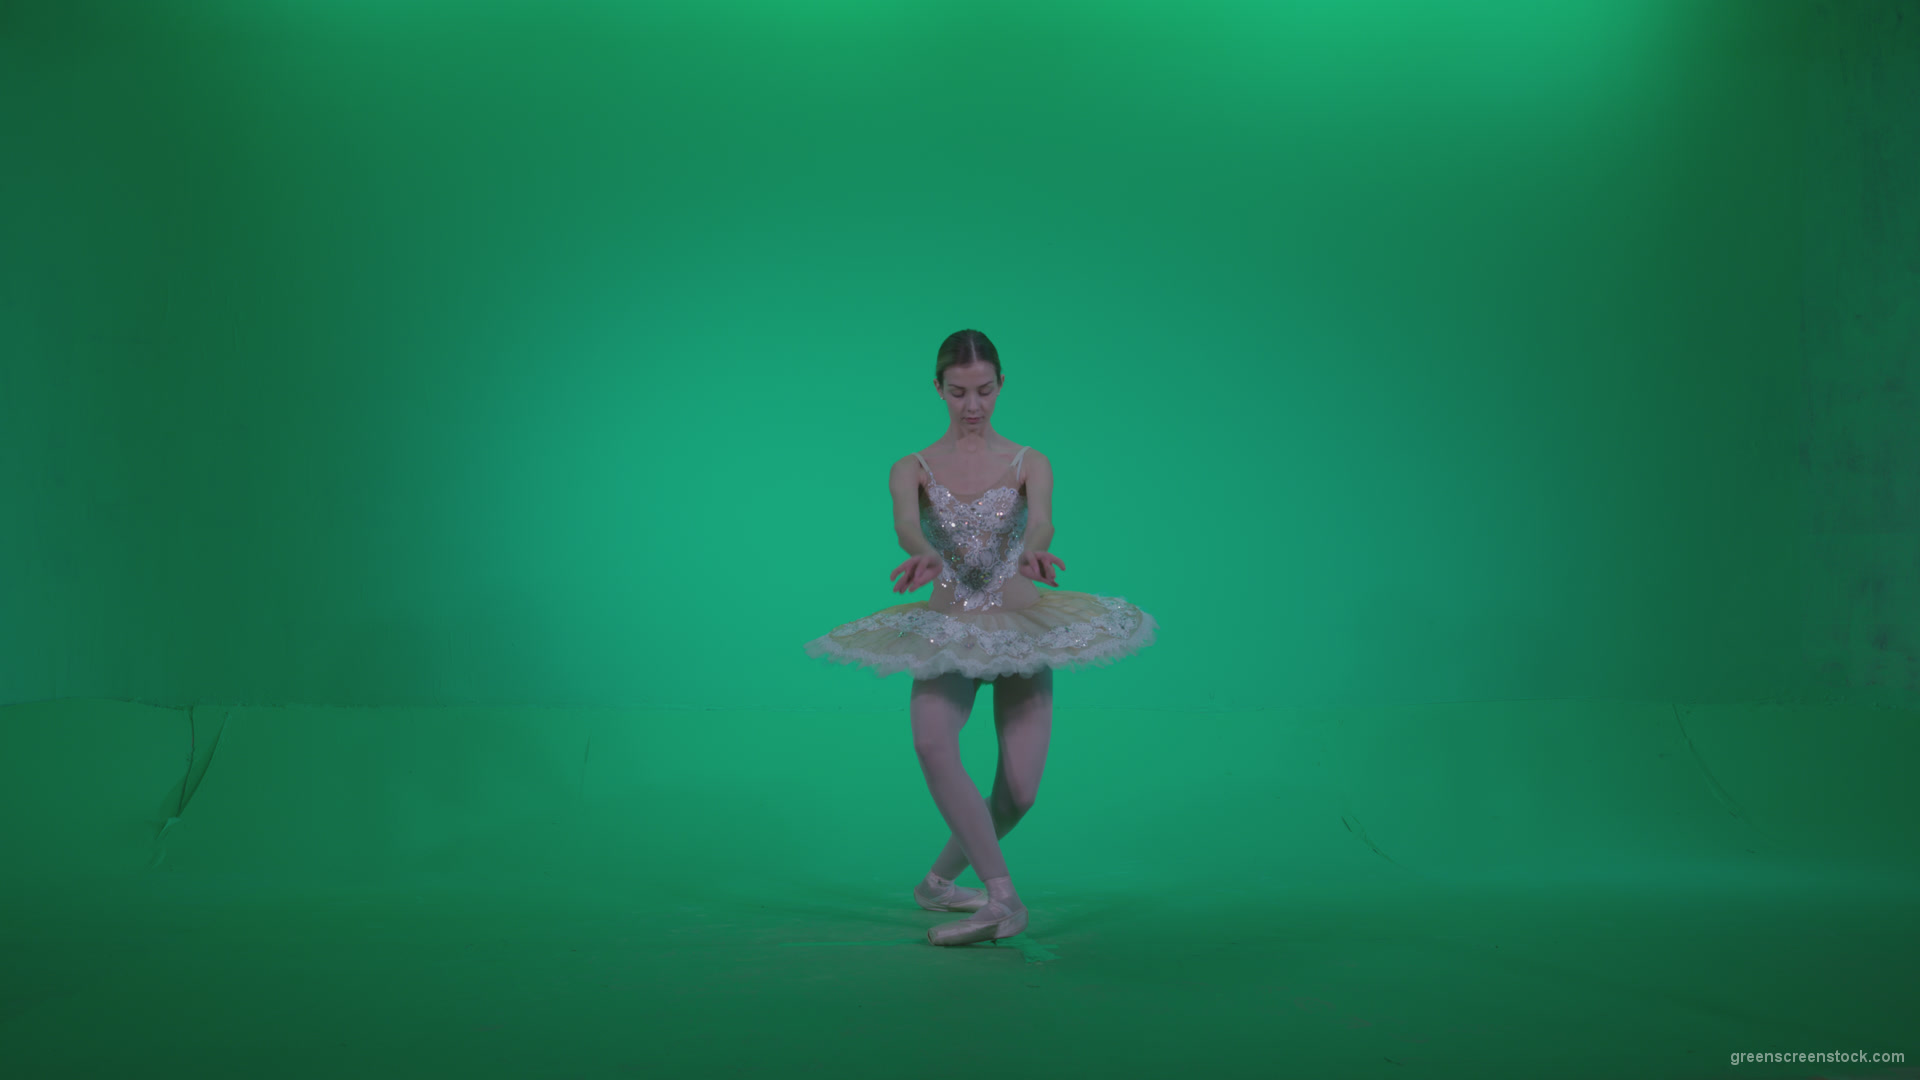 Ballet-White-Swan-s14-Green-Screen-Video-Footage_005 Green Screen Stock